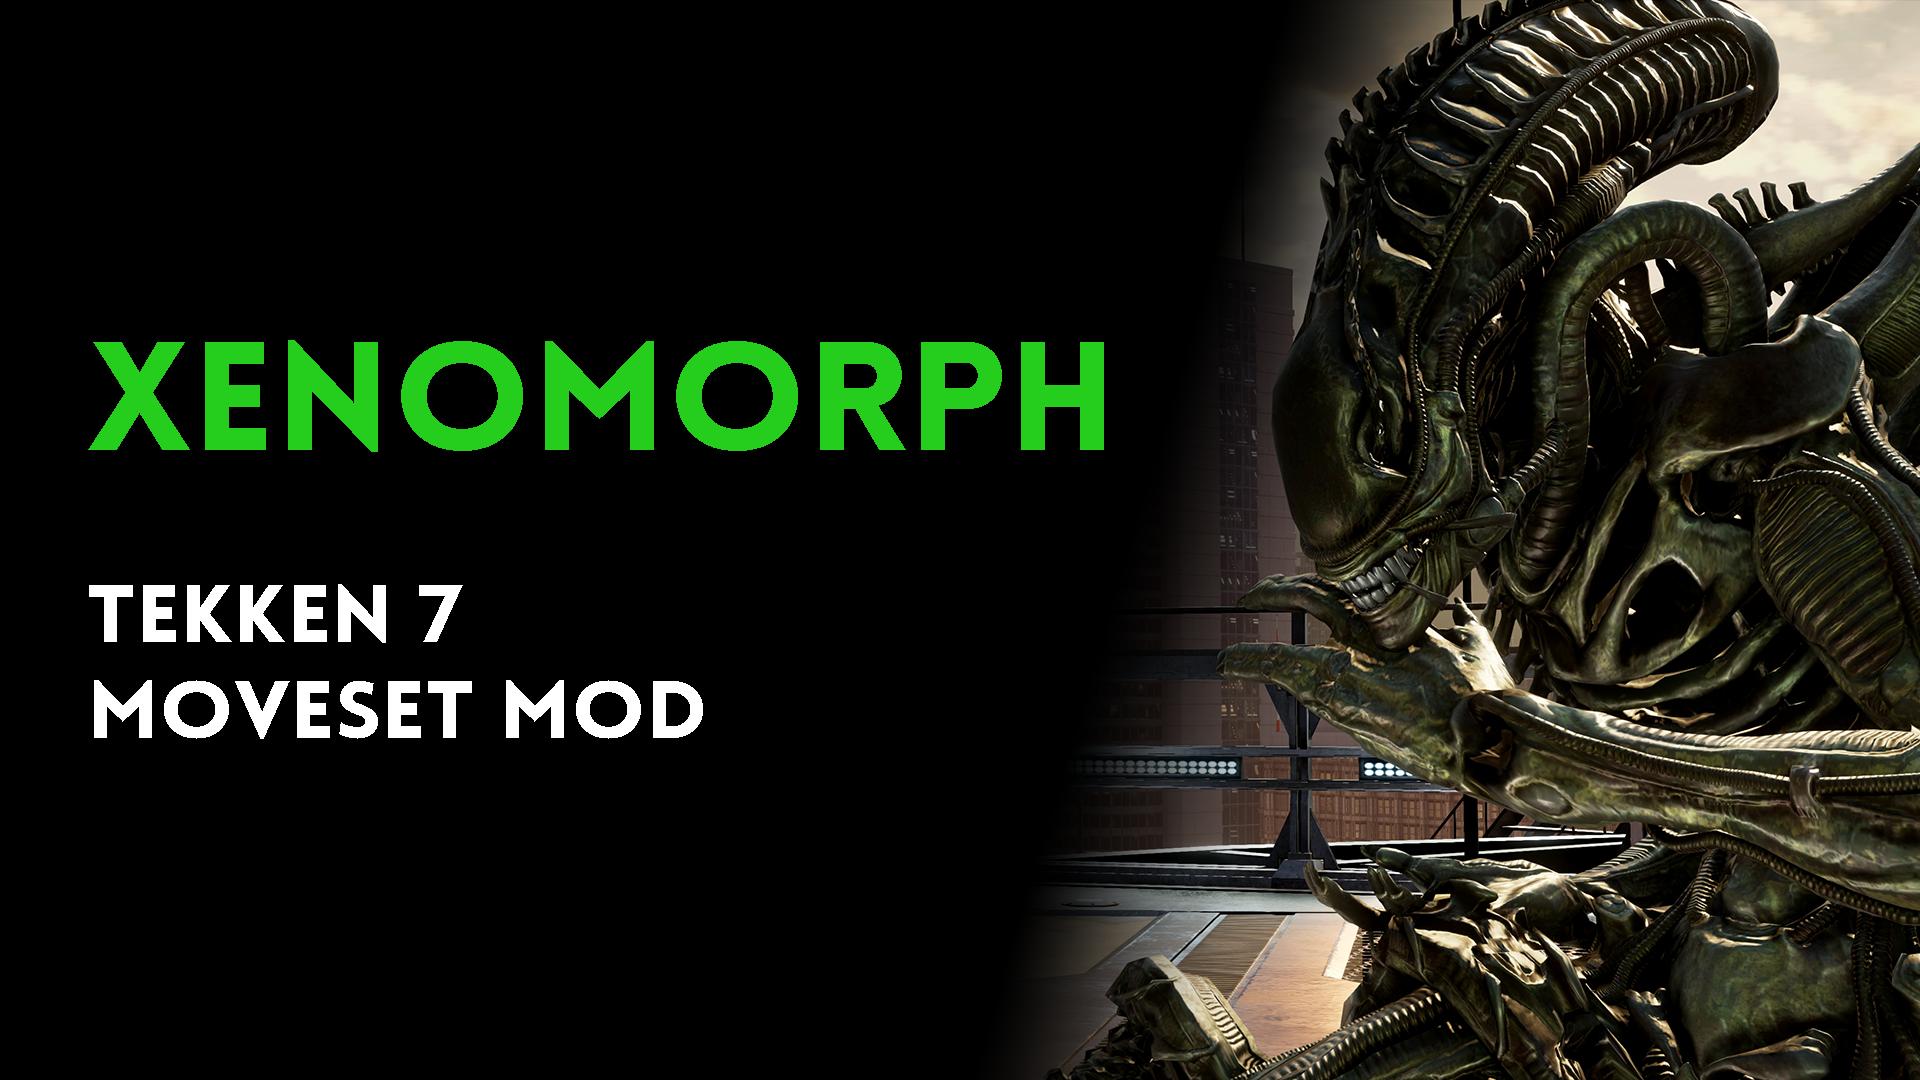 Tekken 7 - Xenomorph Moveset Mod